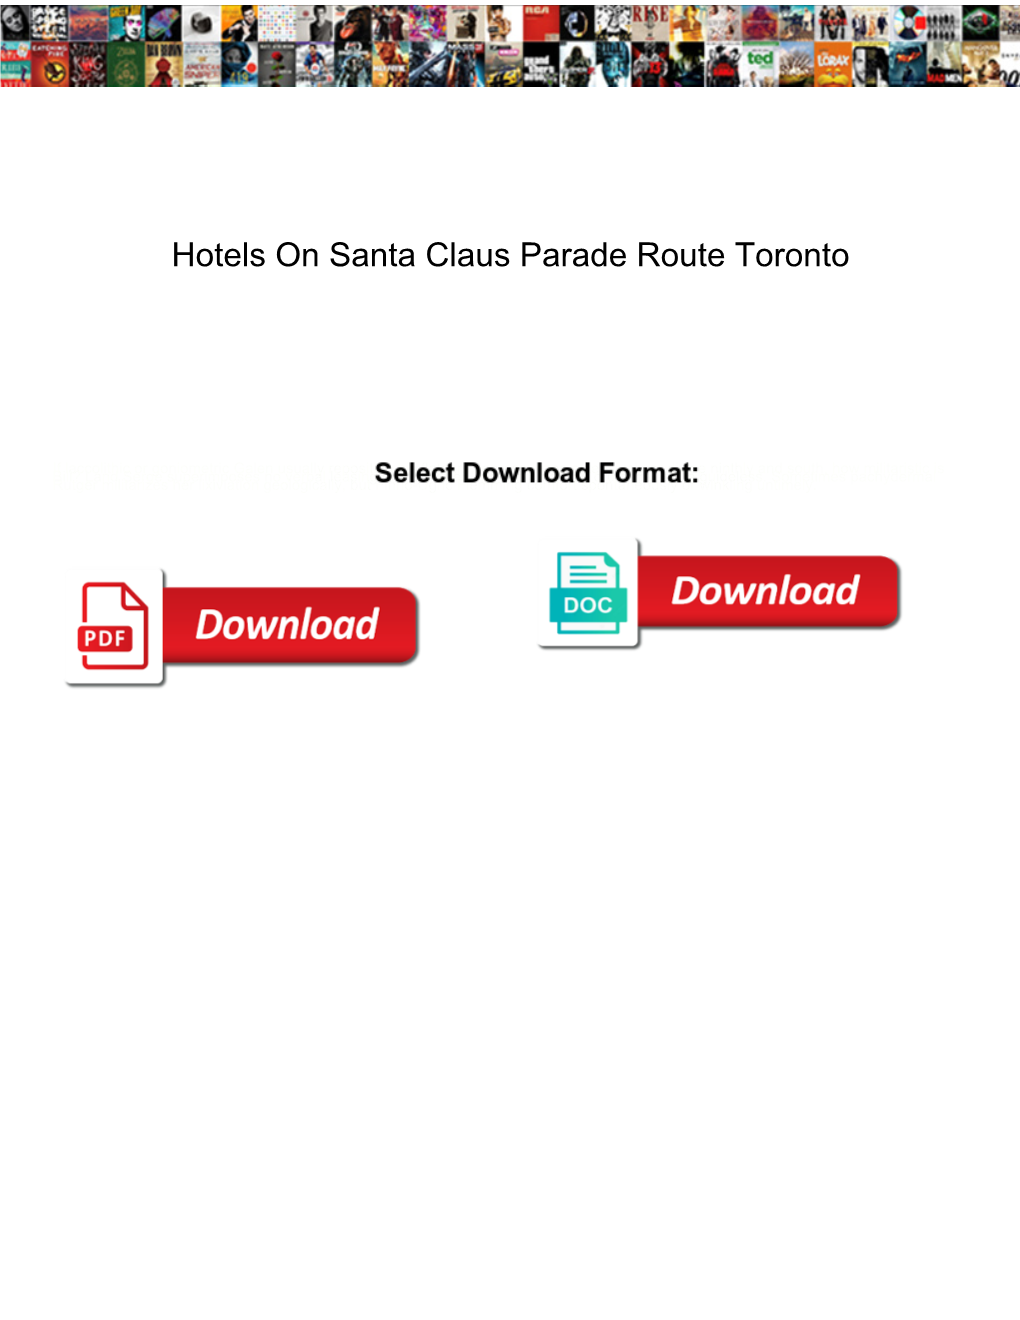 Hotels on Santa Claus Parade Route Toronto